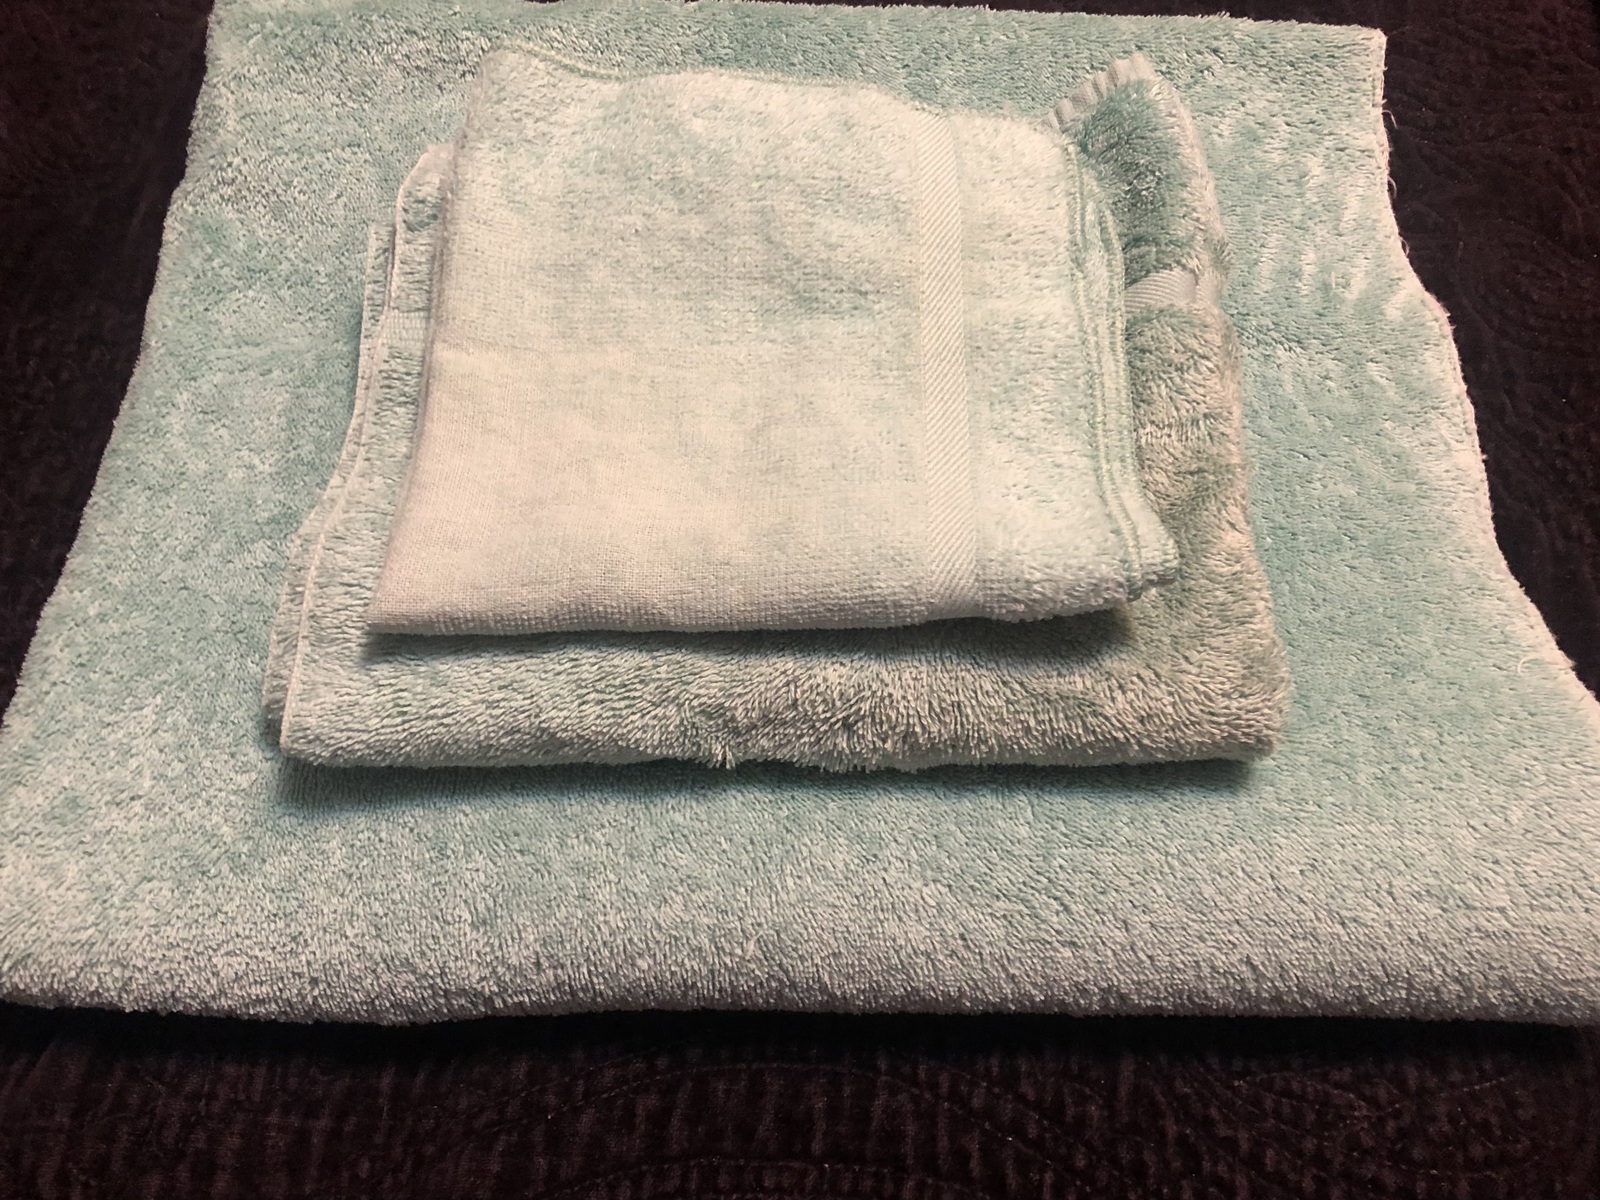 3-Piece Set of Vintage Martex Towels - $33.00